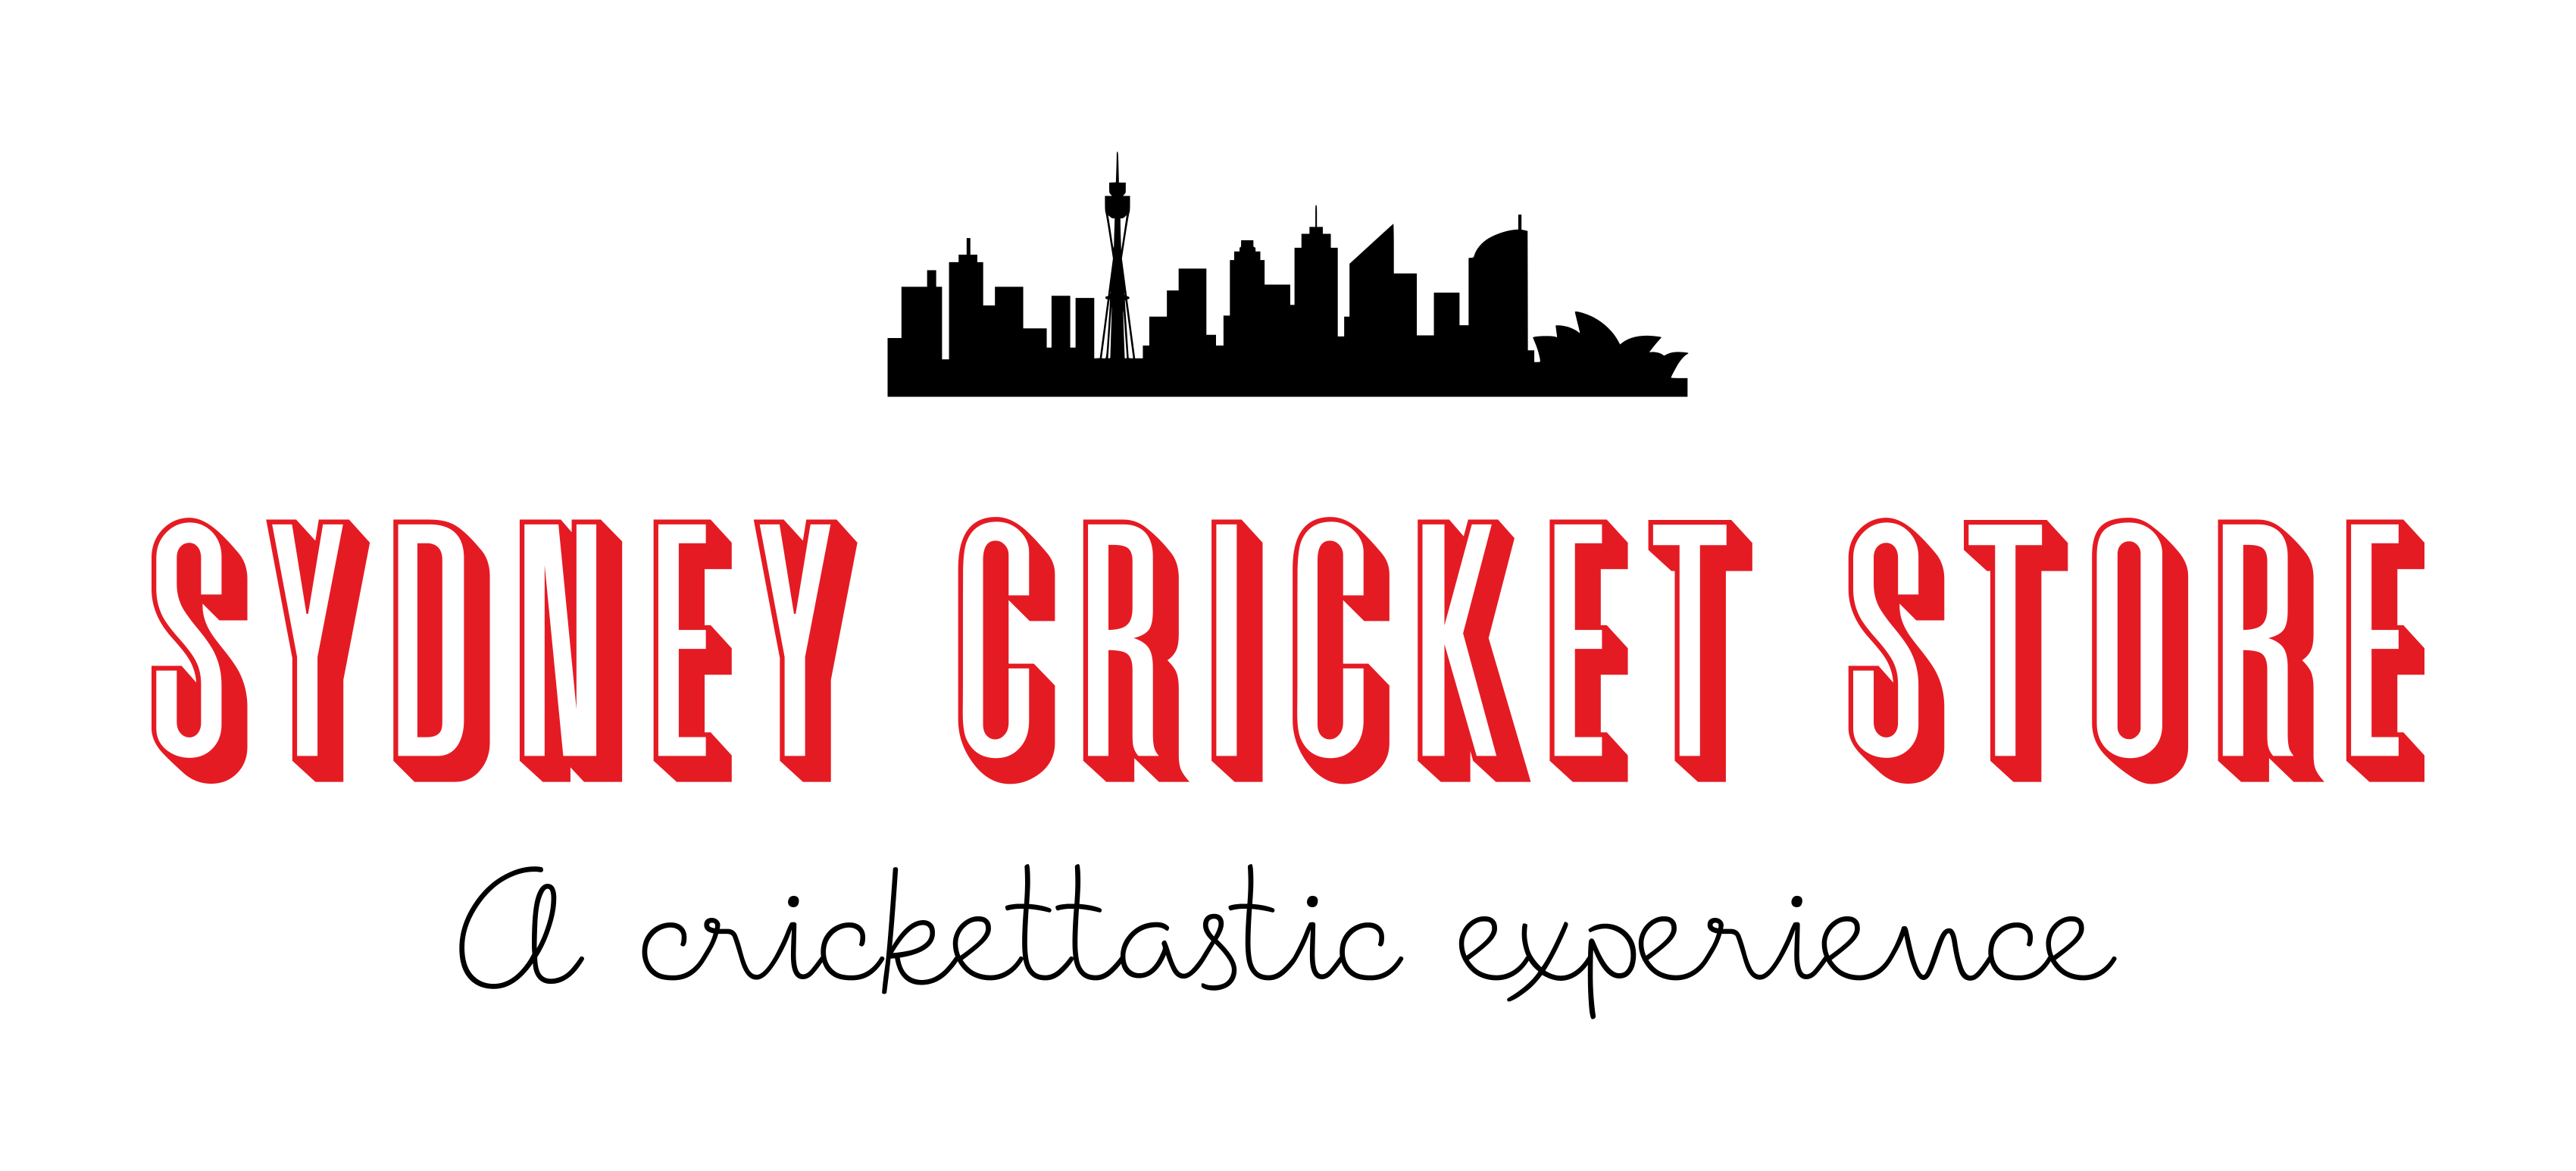 Sydney Cricket Store